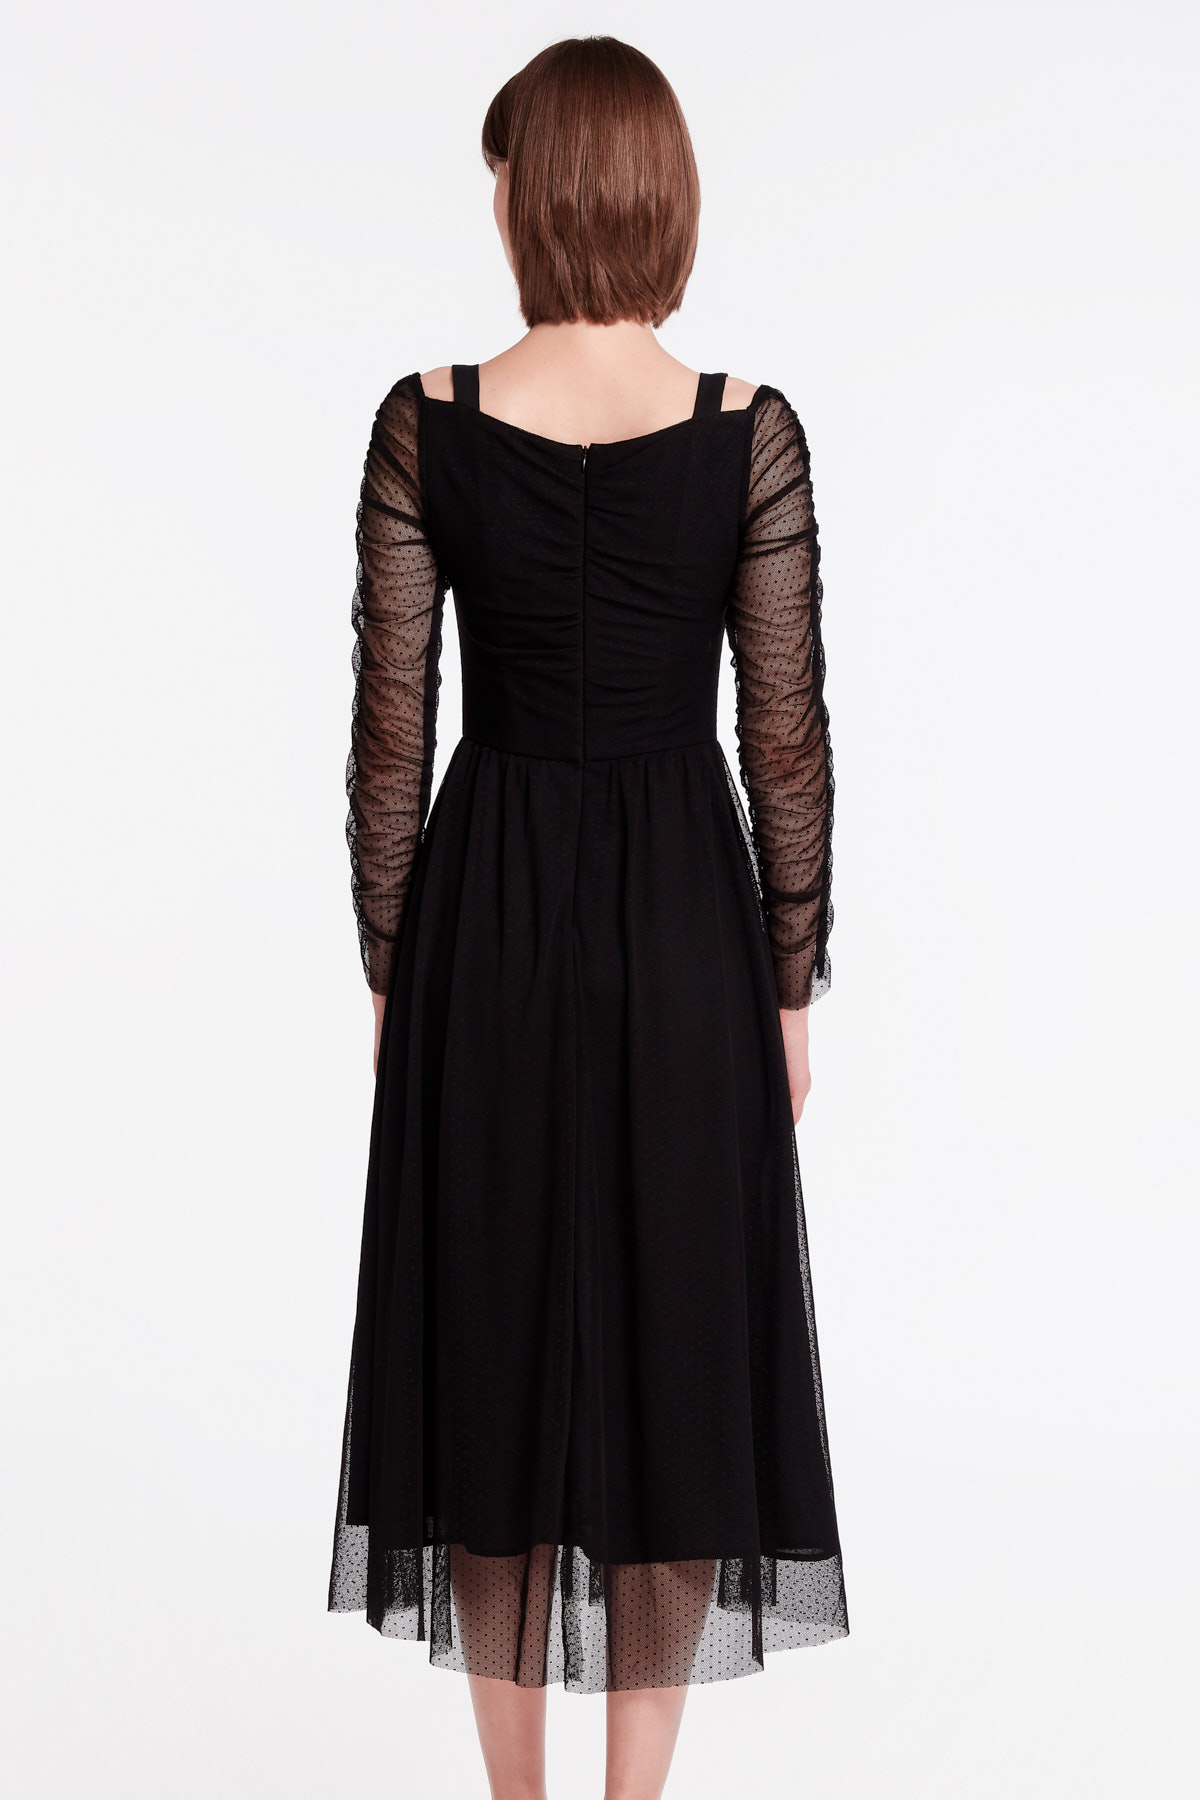 Black midi dress with breast bands, photo 5